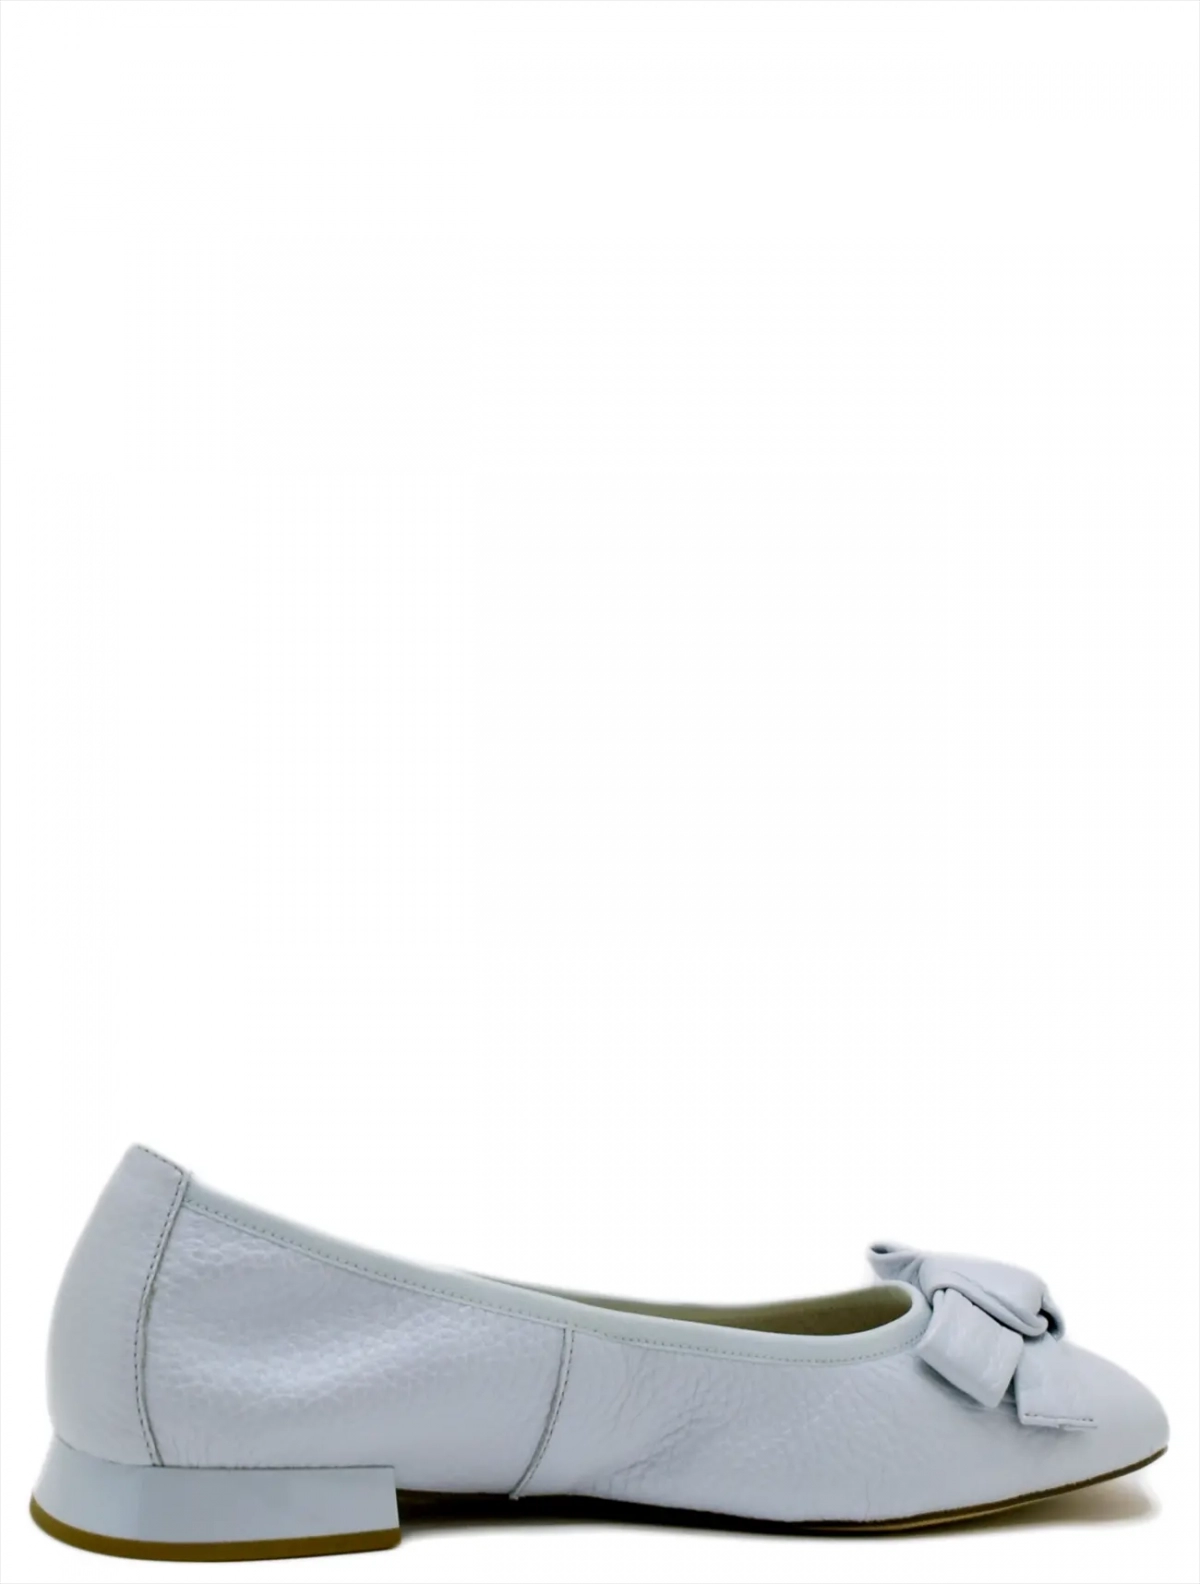 Caprice 9-22105-20-843 женские туфли